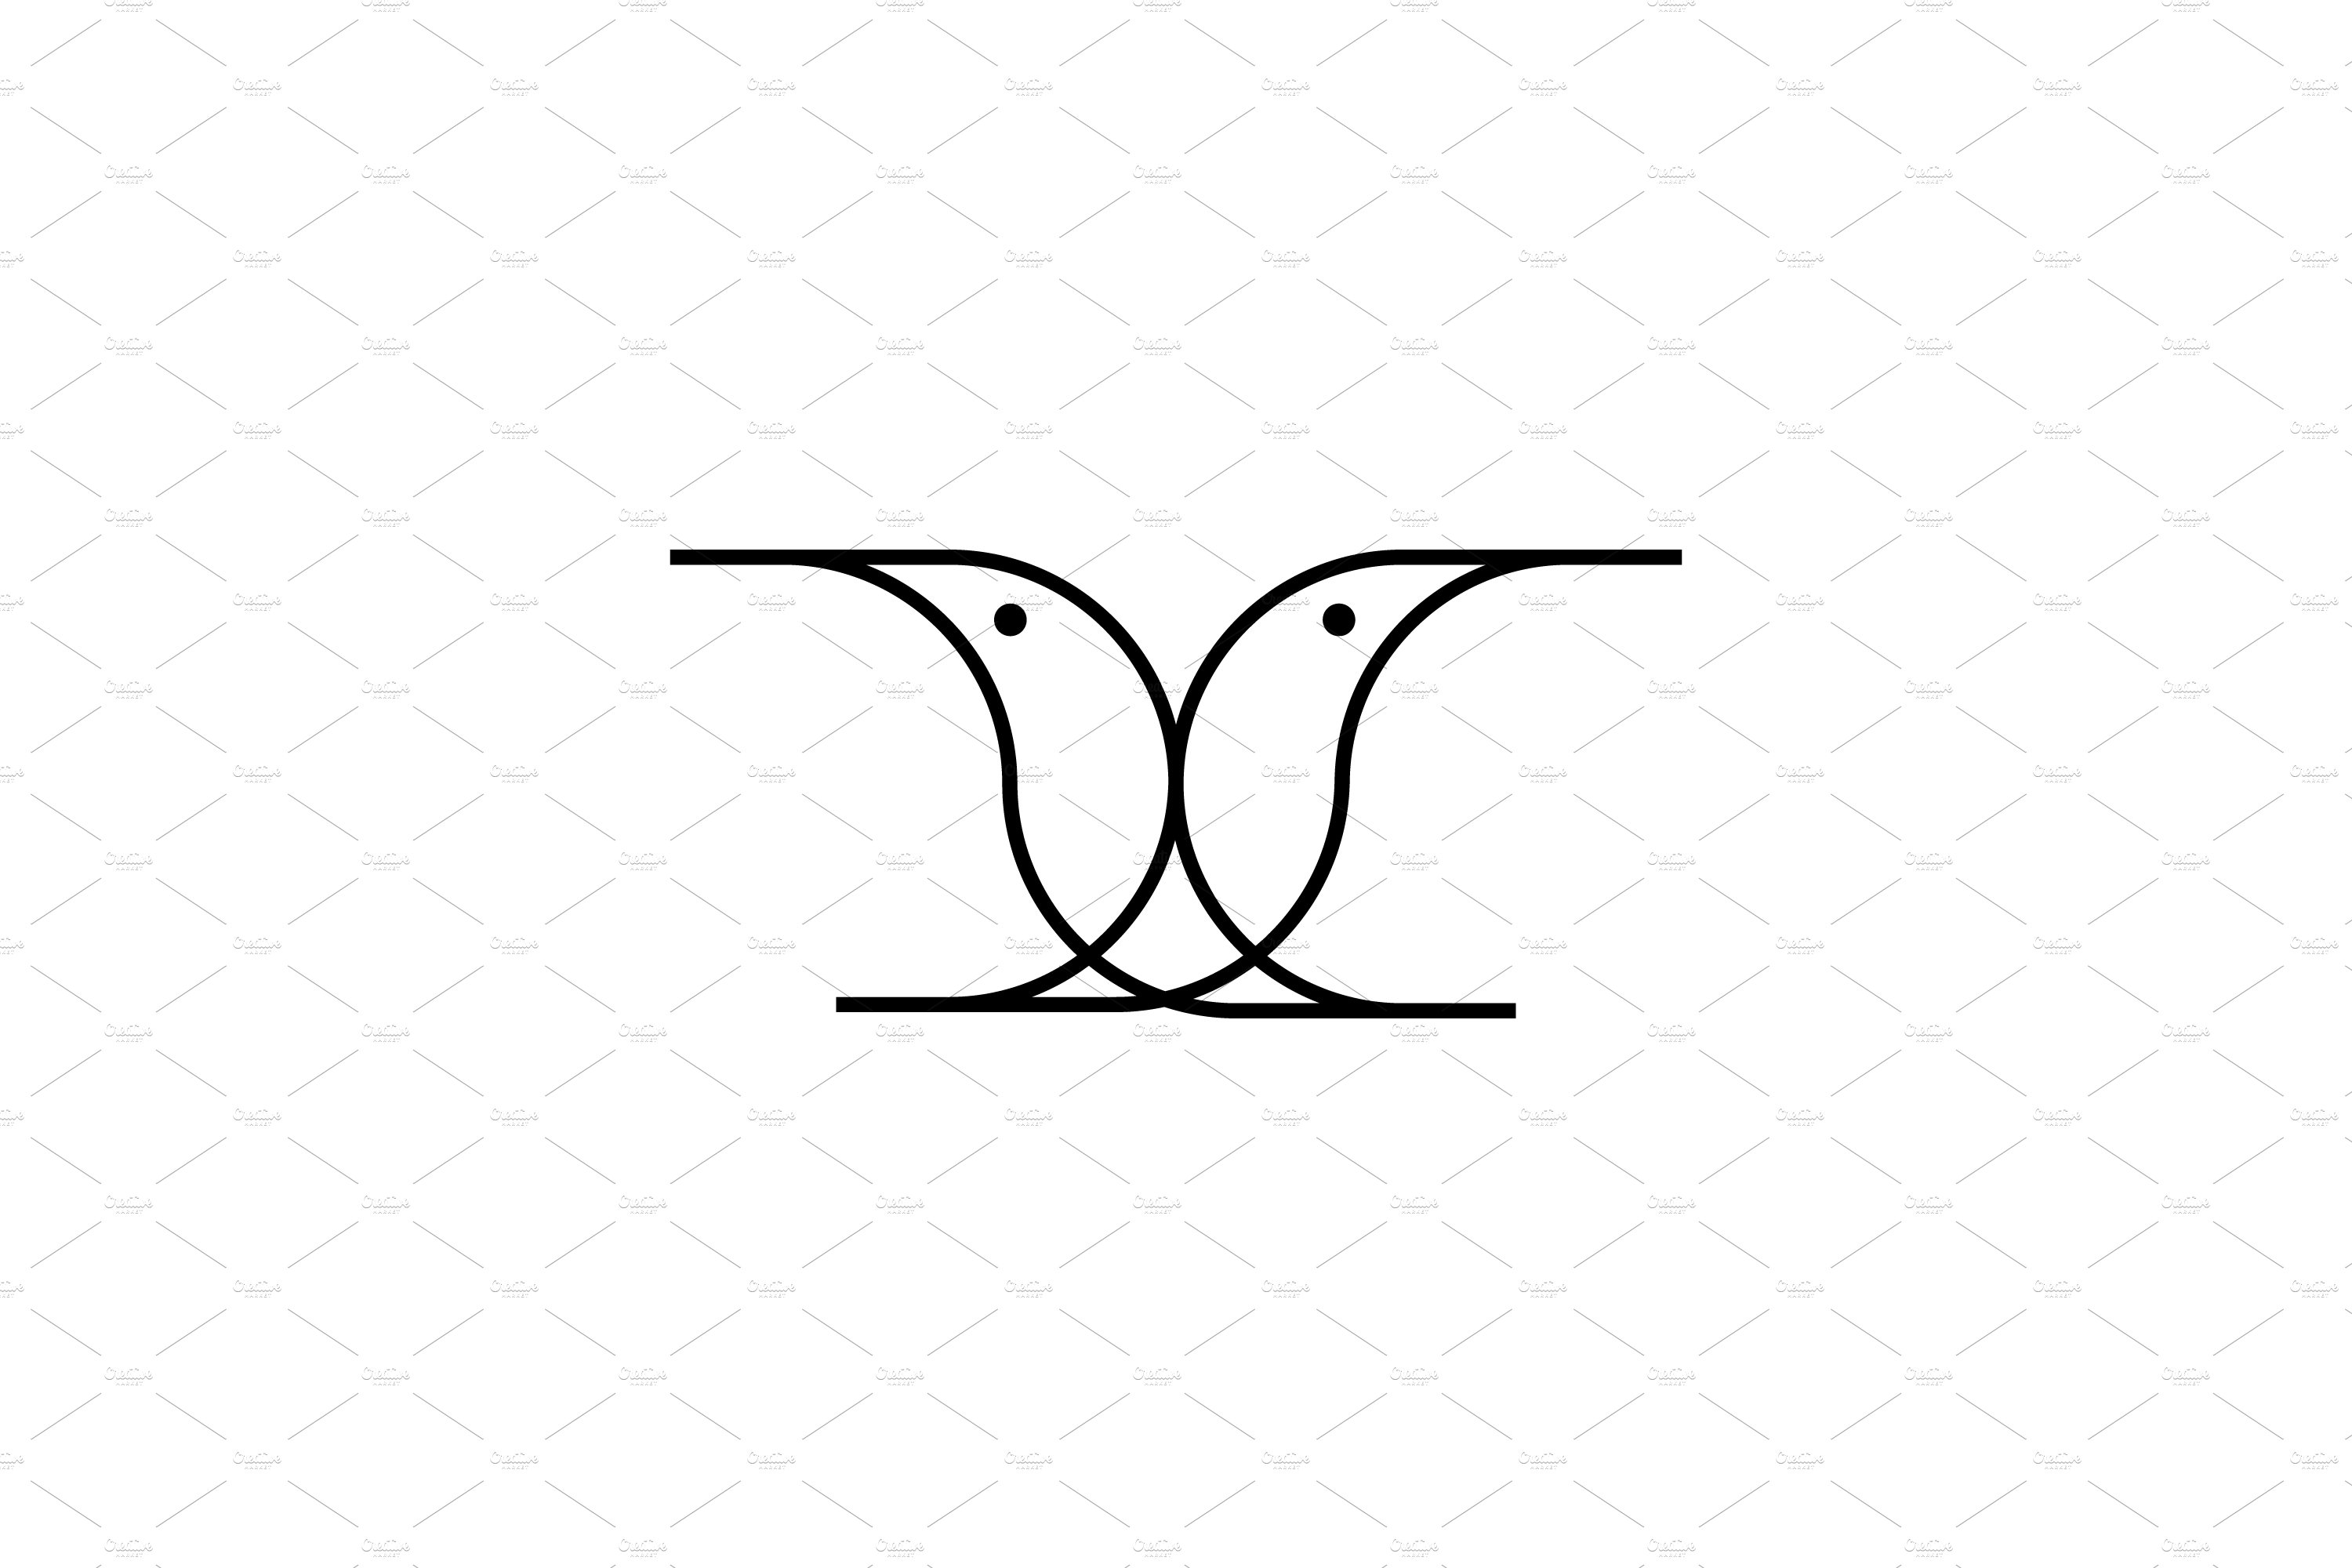 Two Bird Logo cover image.